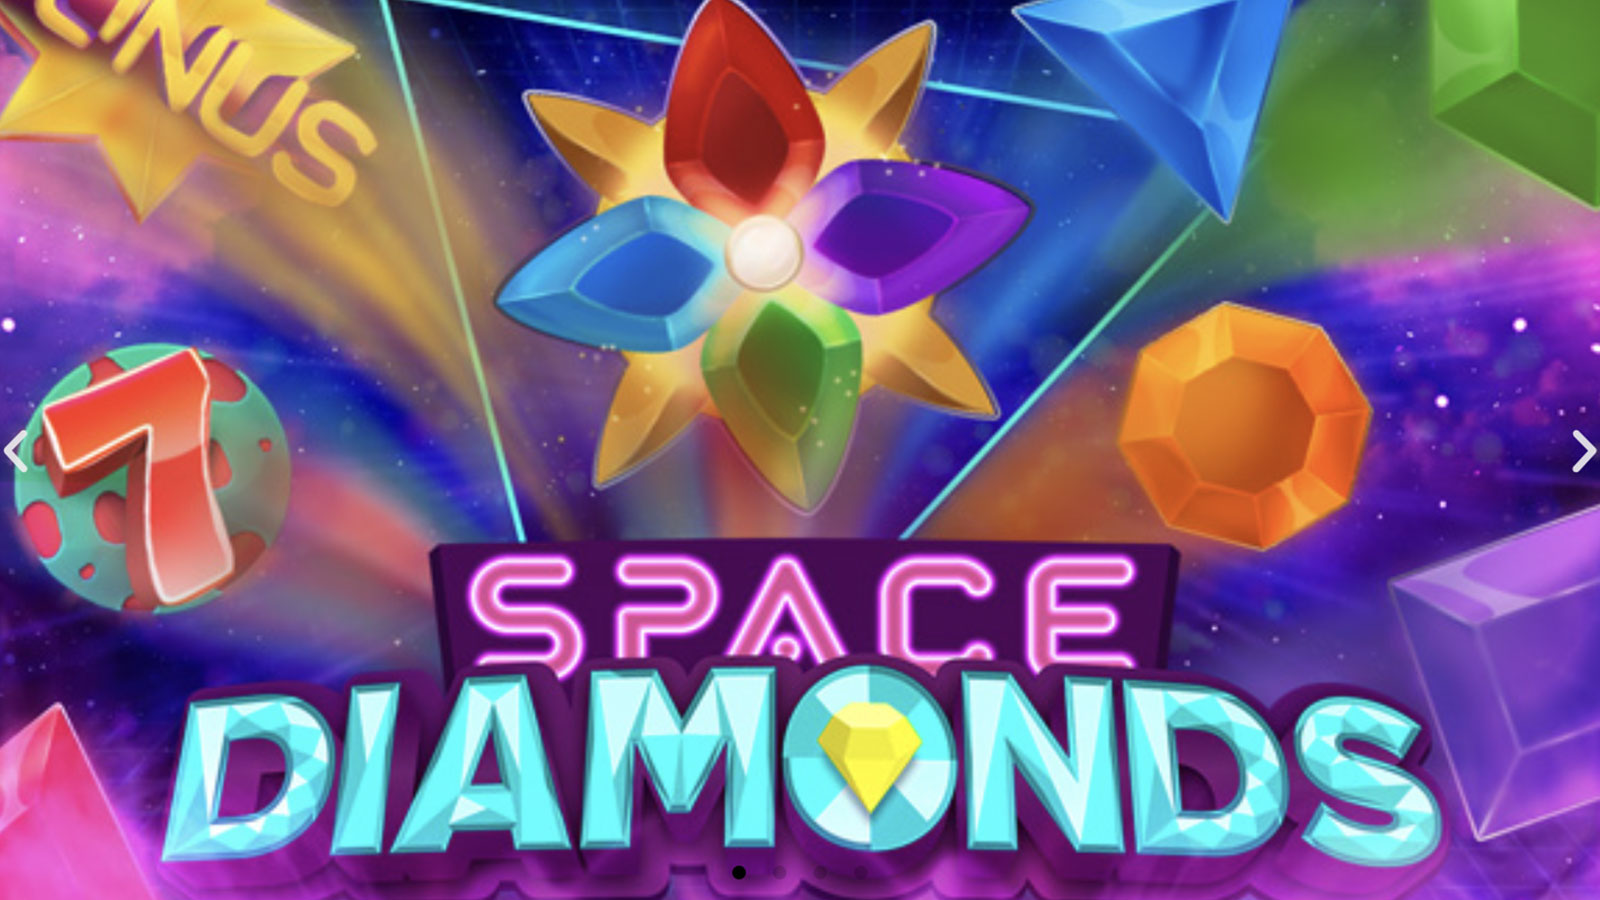 juegos-orion-arriendo-space-diamonds-1.jpg